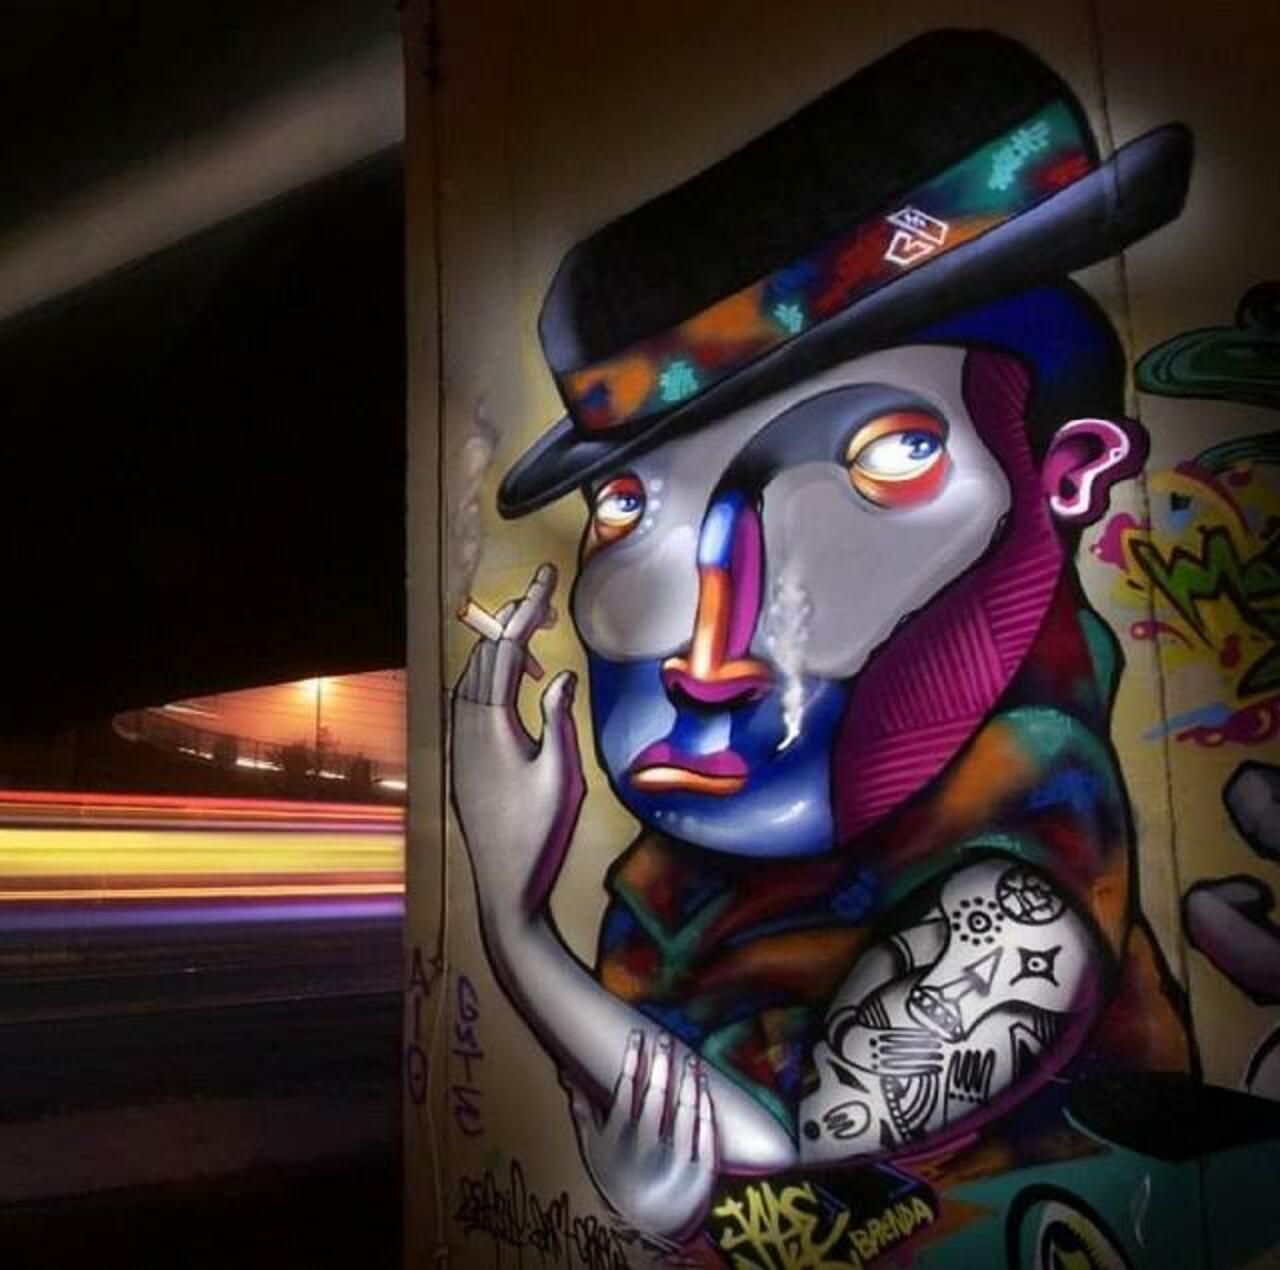 Abstract Street Art by Jade Rivera 

#art #mural #graffiti #streetart http://t.co/w8BgkJP8AR